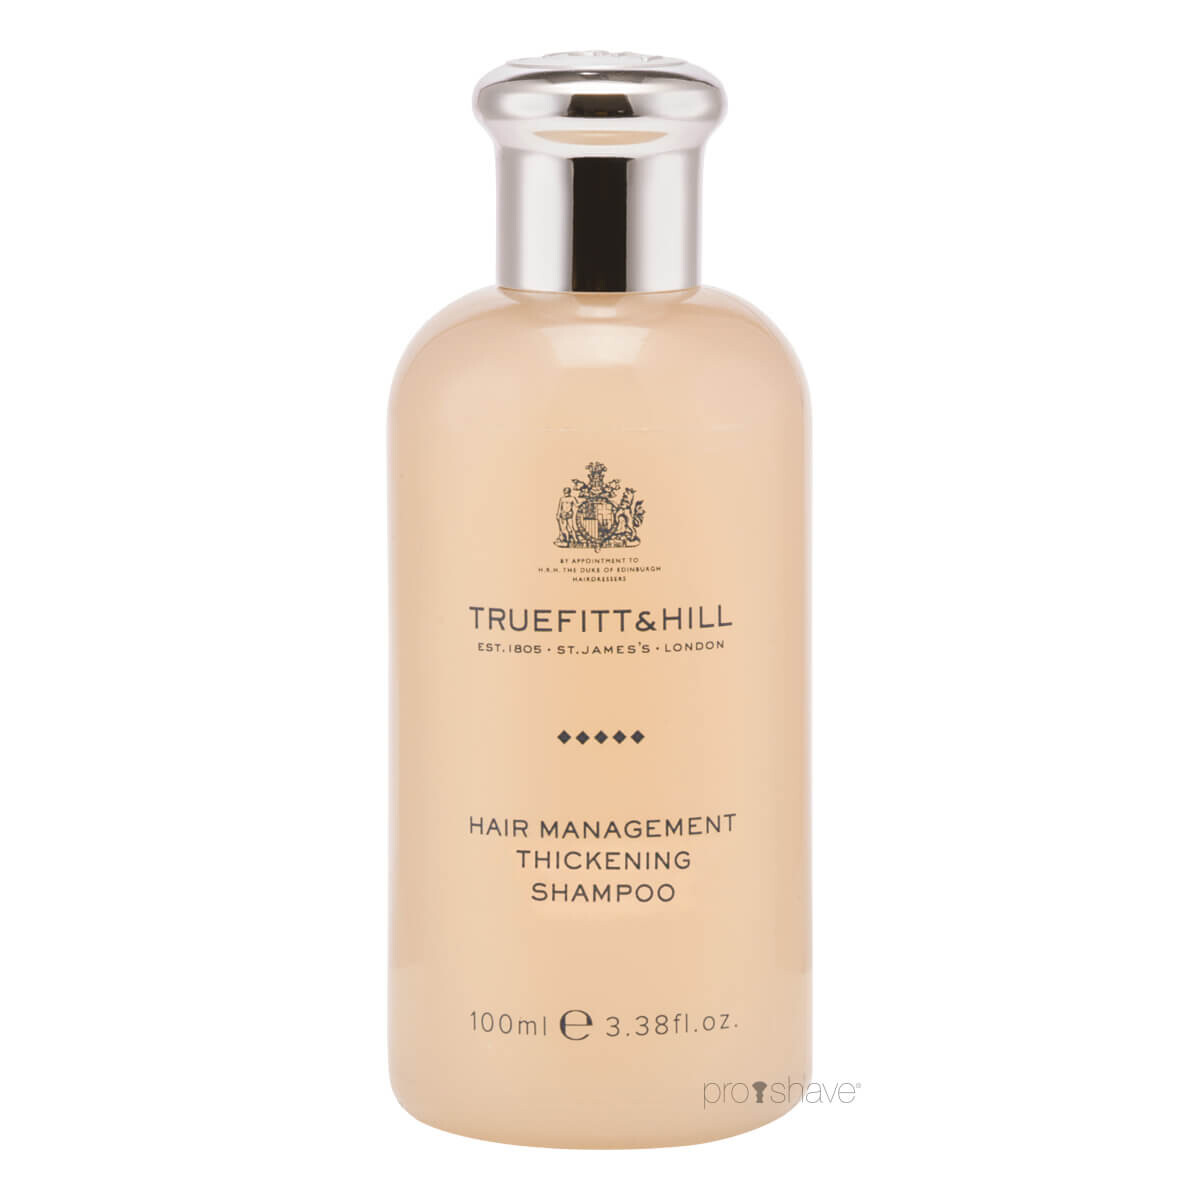 #1 - Truefitt & Hill Thickening Shampoo, 100 ml.